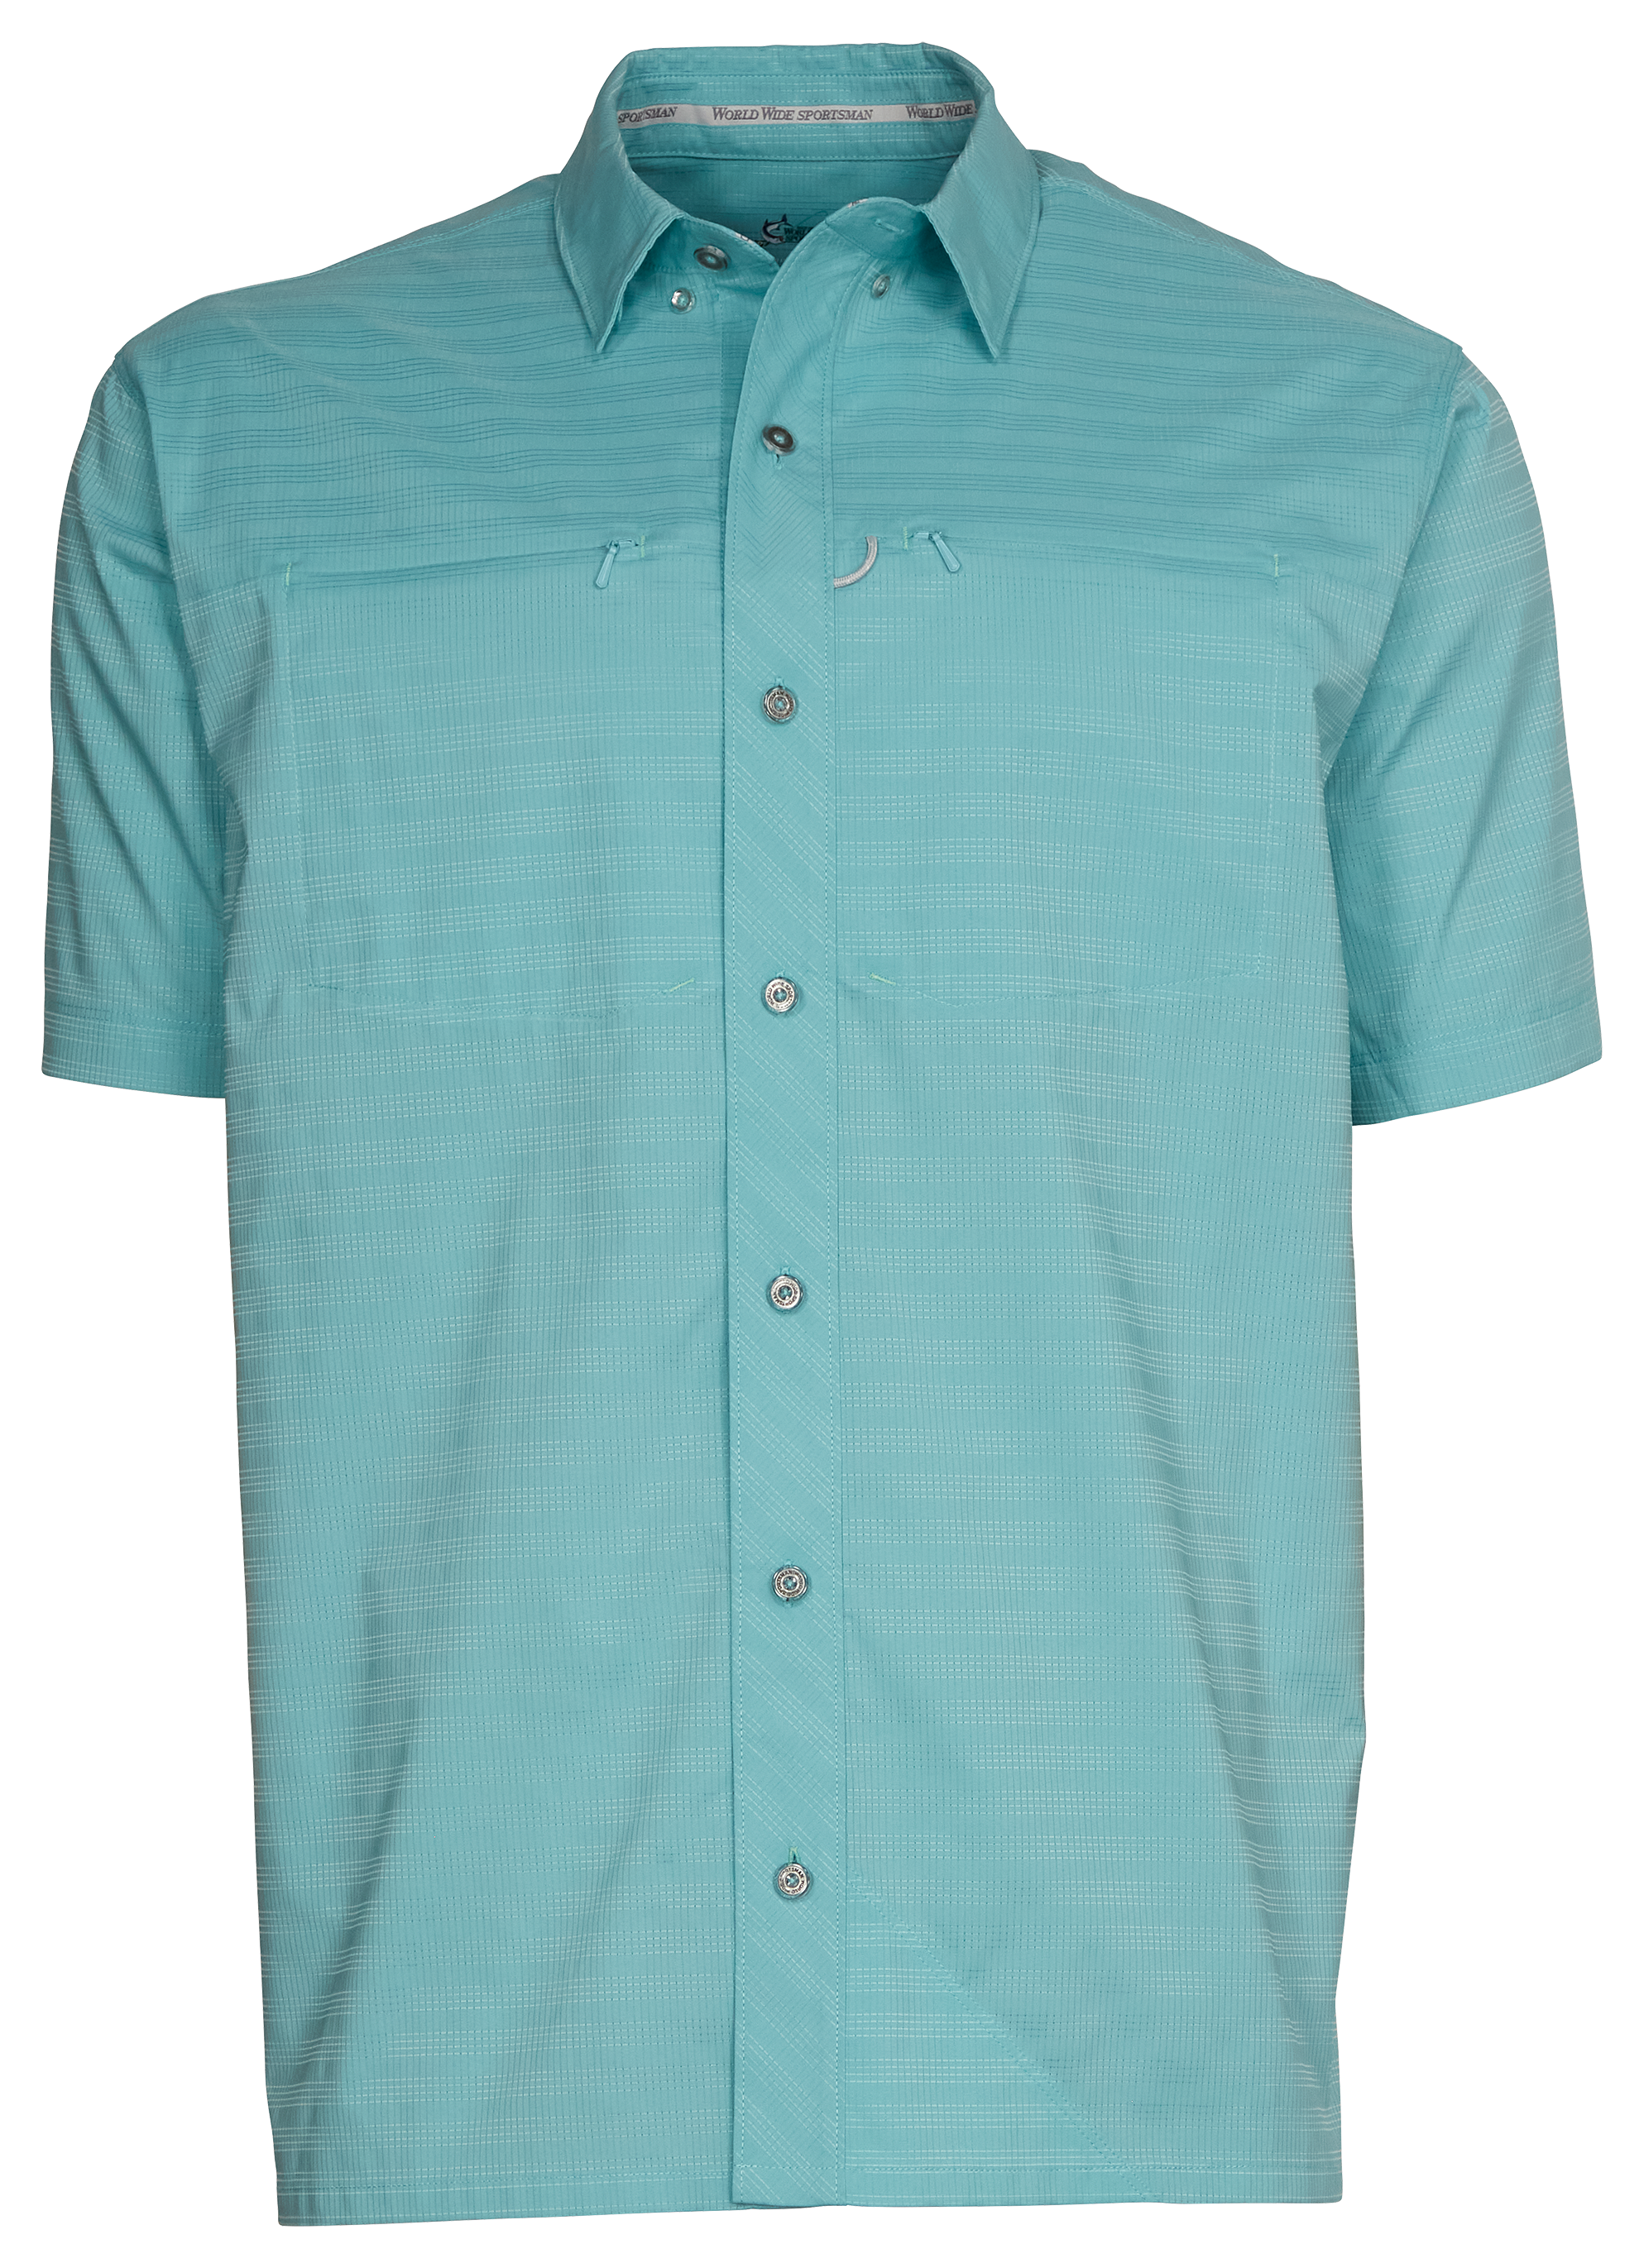 World Wide Sportsman Seacrest 2-Pocket Short-Sleeve Button-Down Shirt for Men - Reef Waters - XL